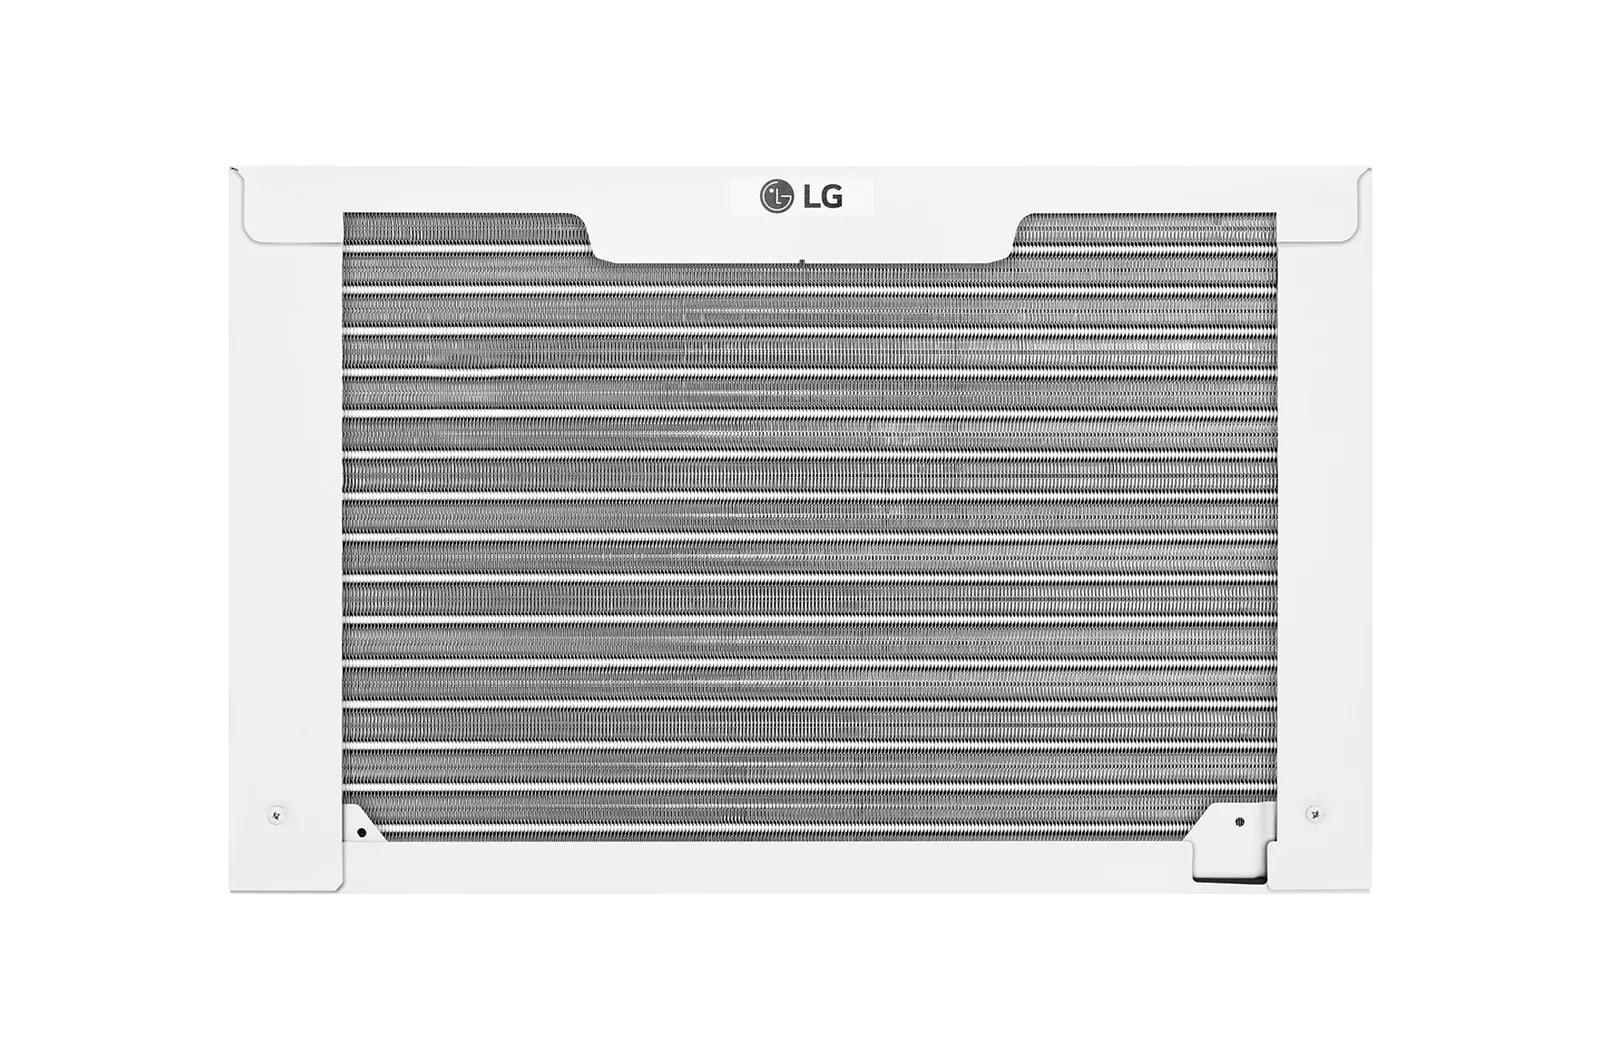 Lg 24,000/ 24,500 BTU Window Air Conditioner